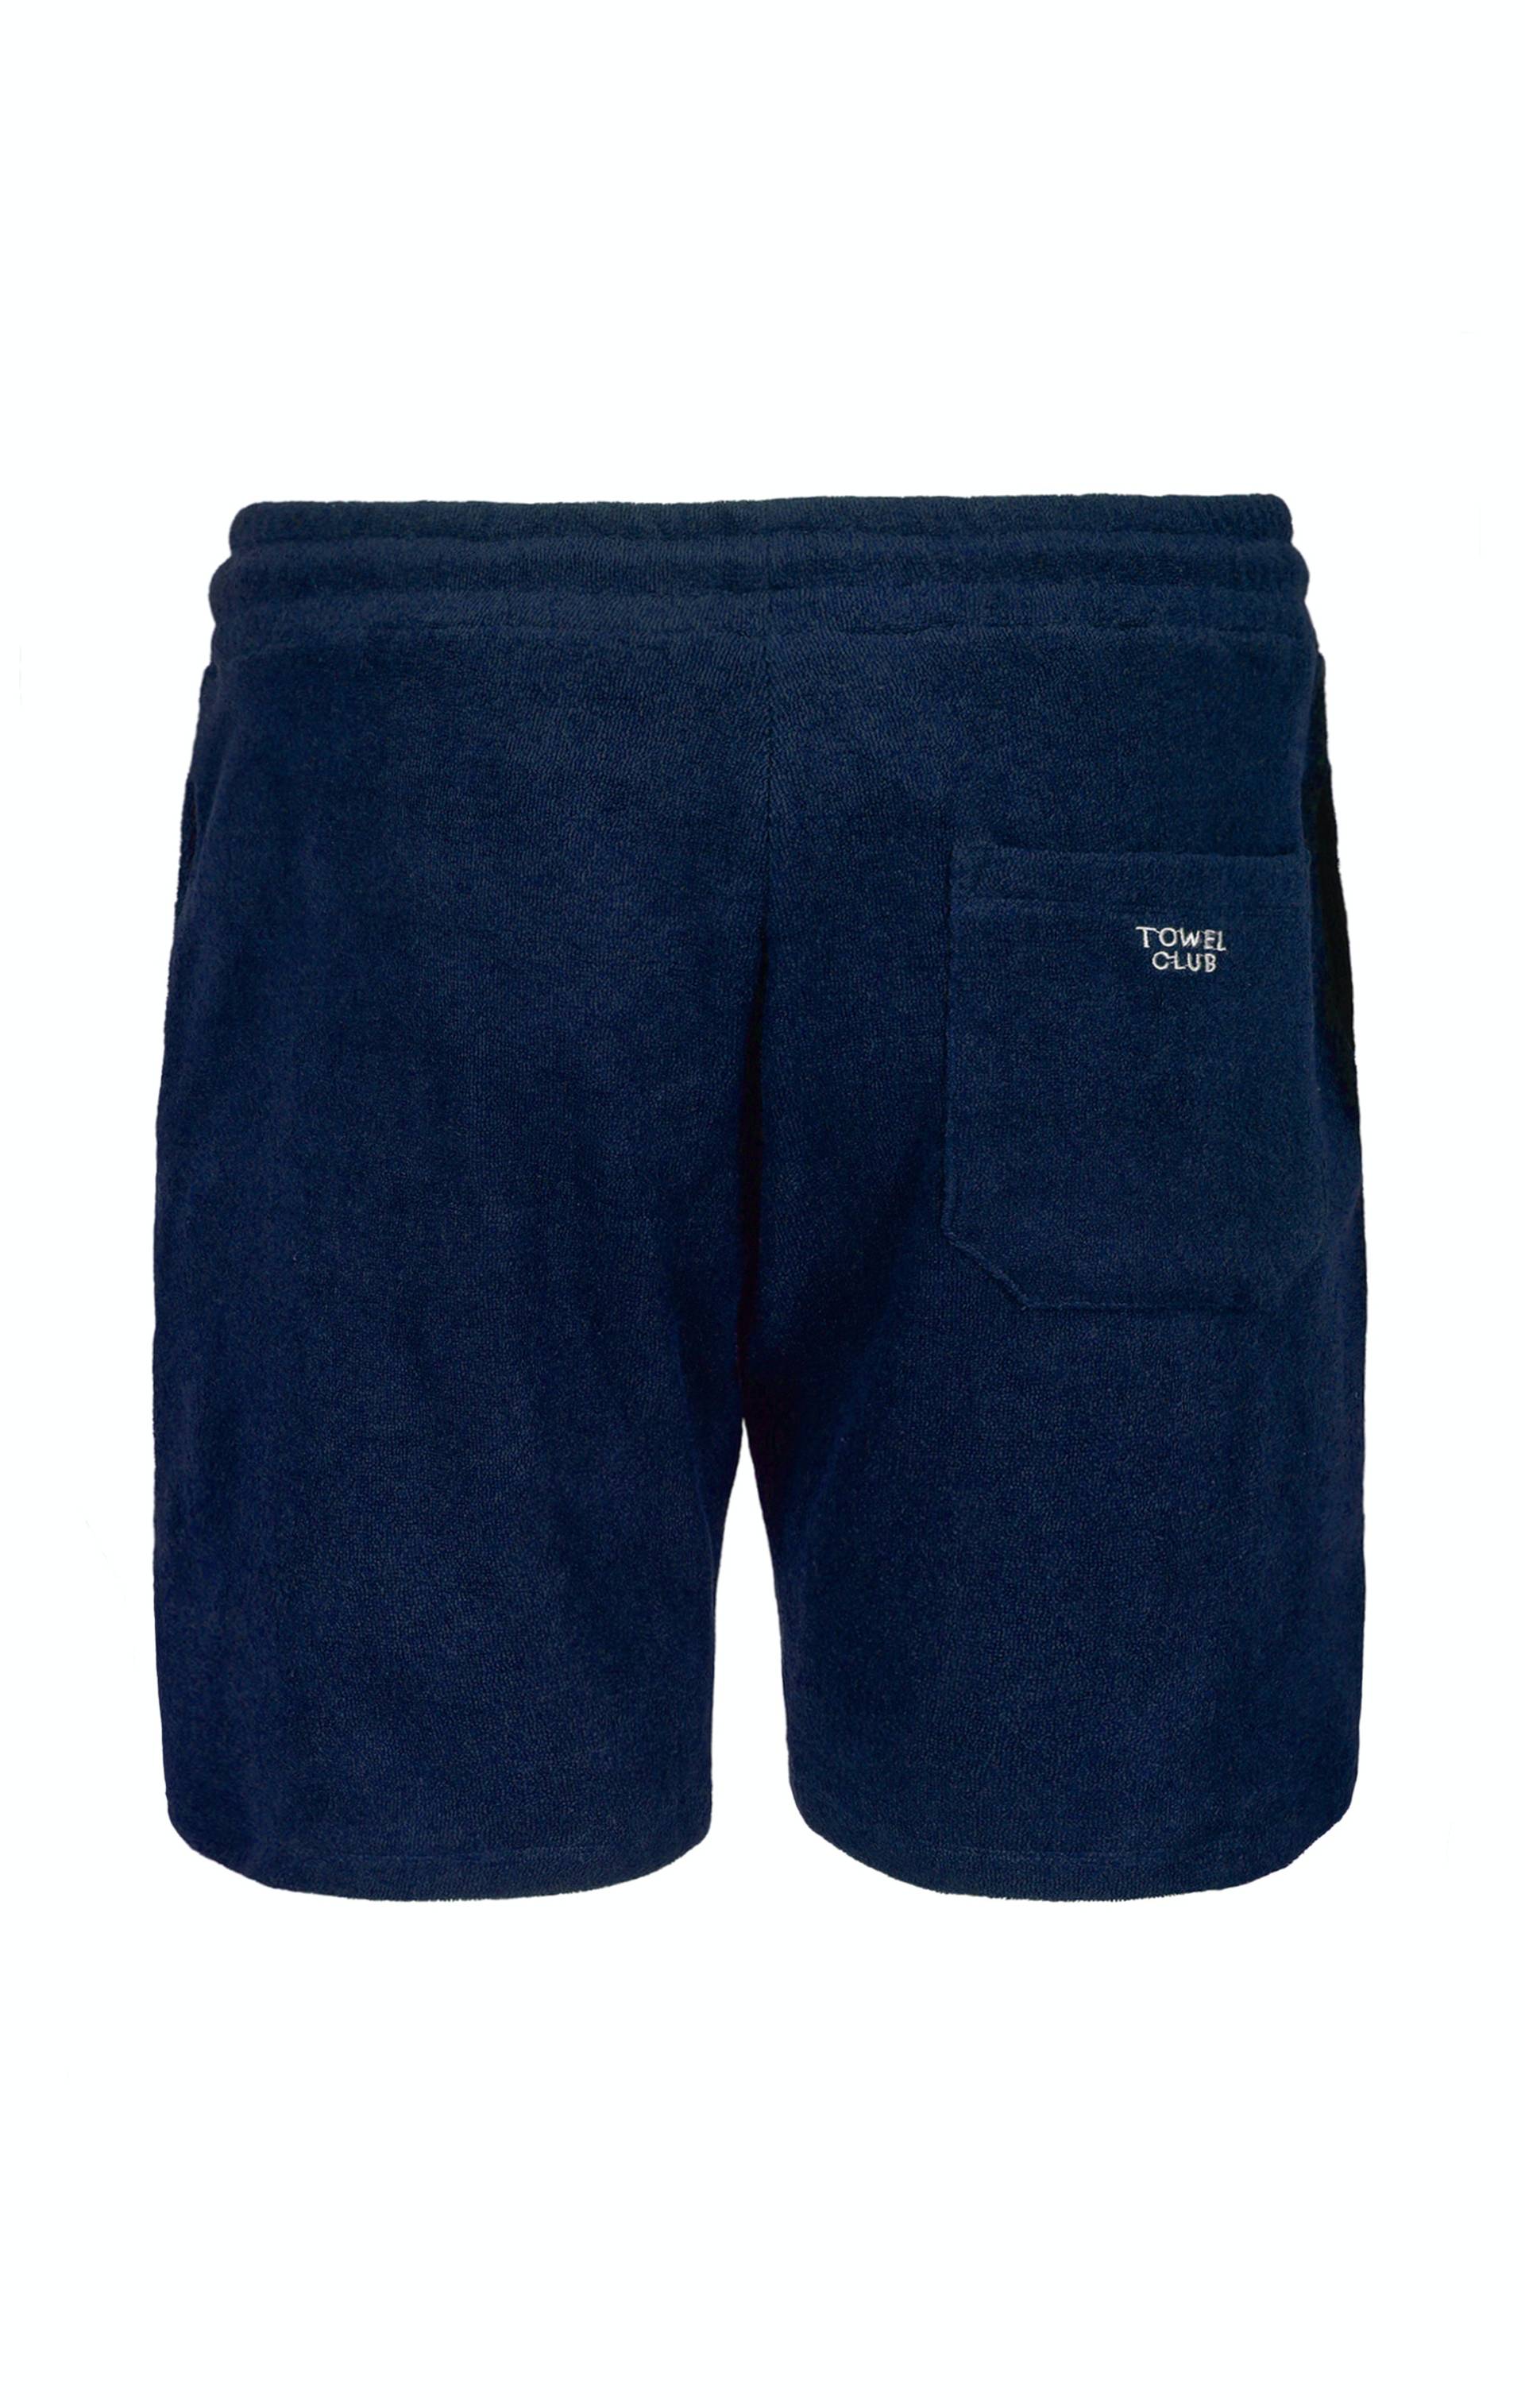 Onepiece Towel Club Shorts Navy - 12